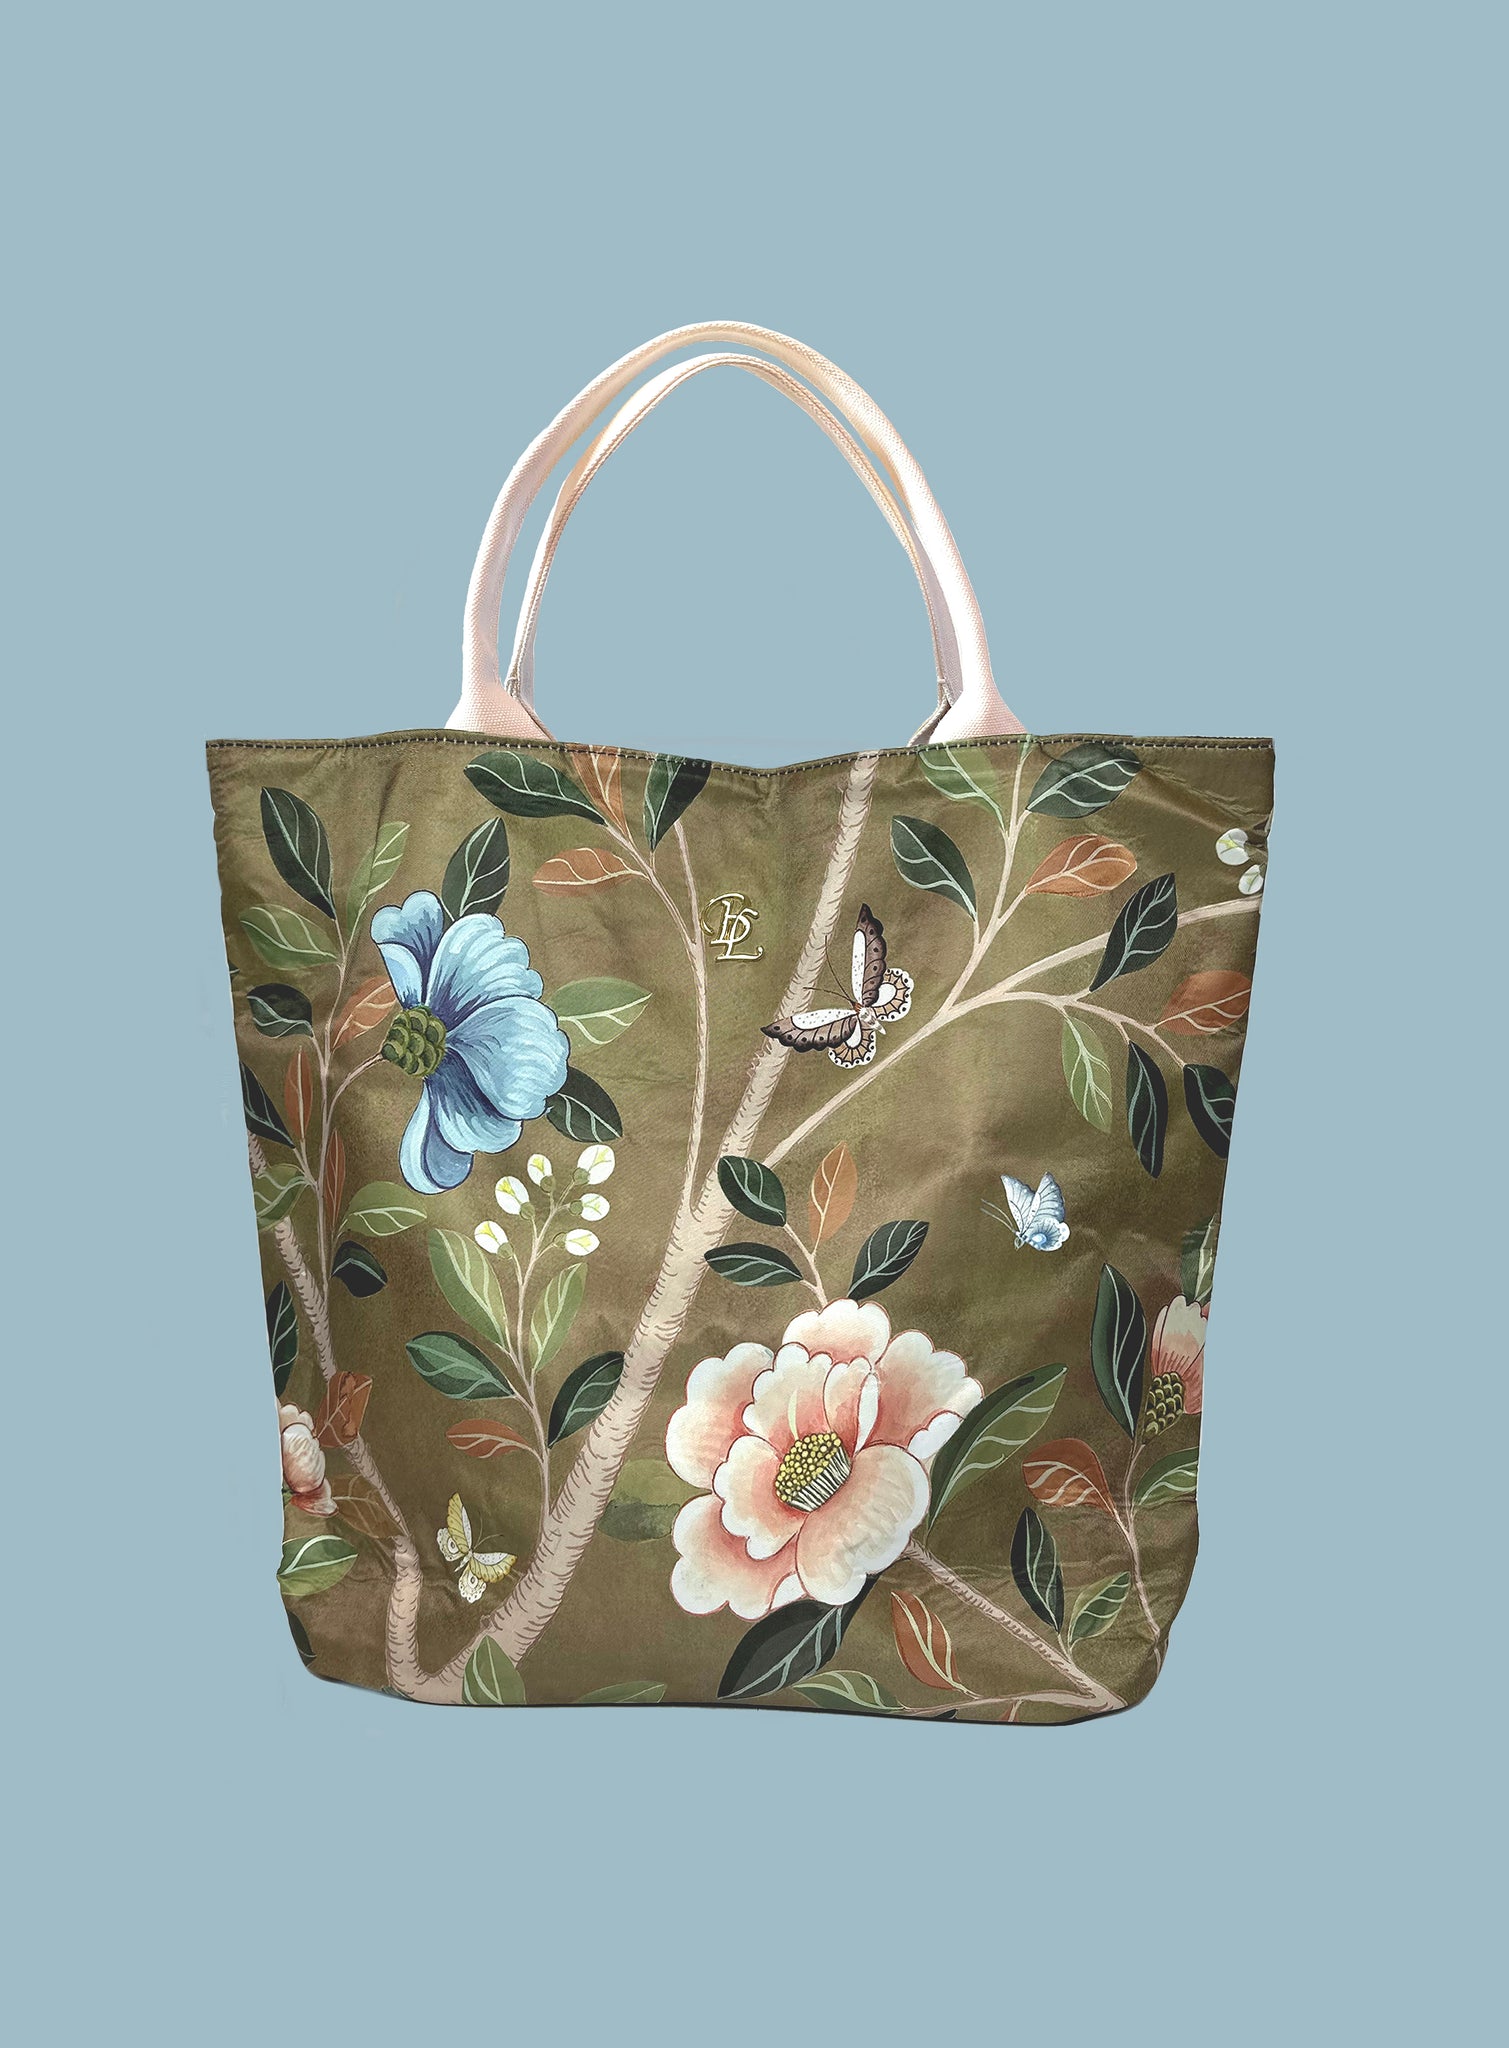 Camellia tote bag front shot. fashion accessory